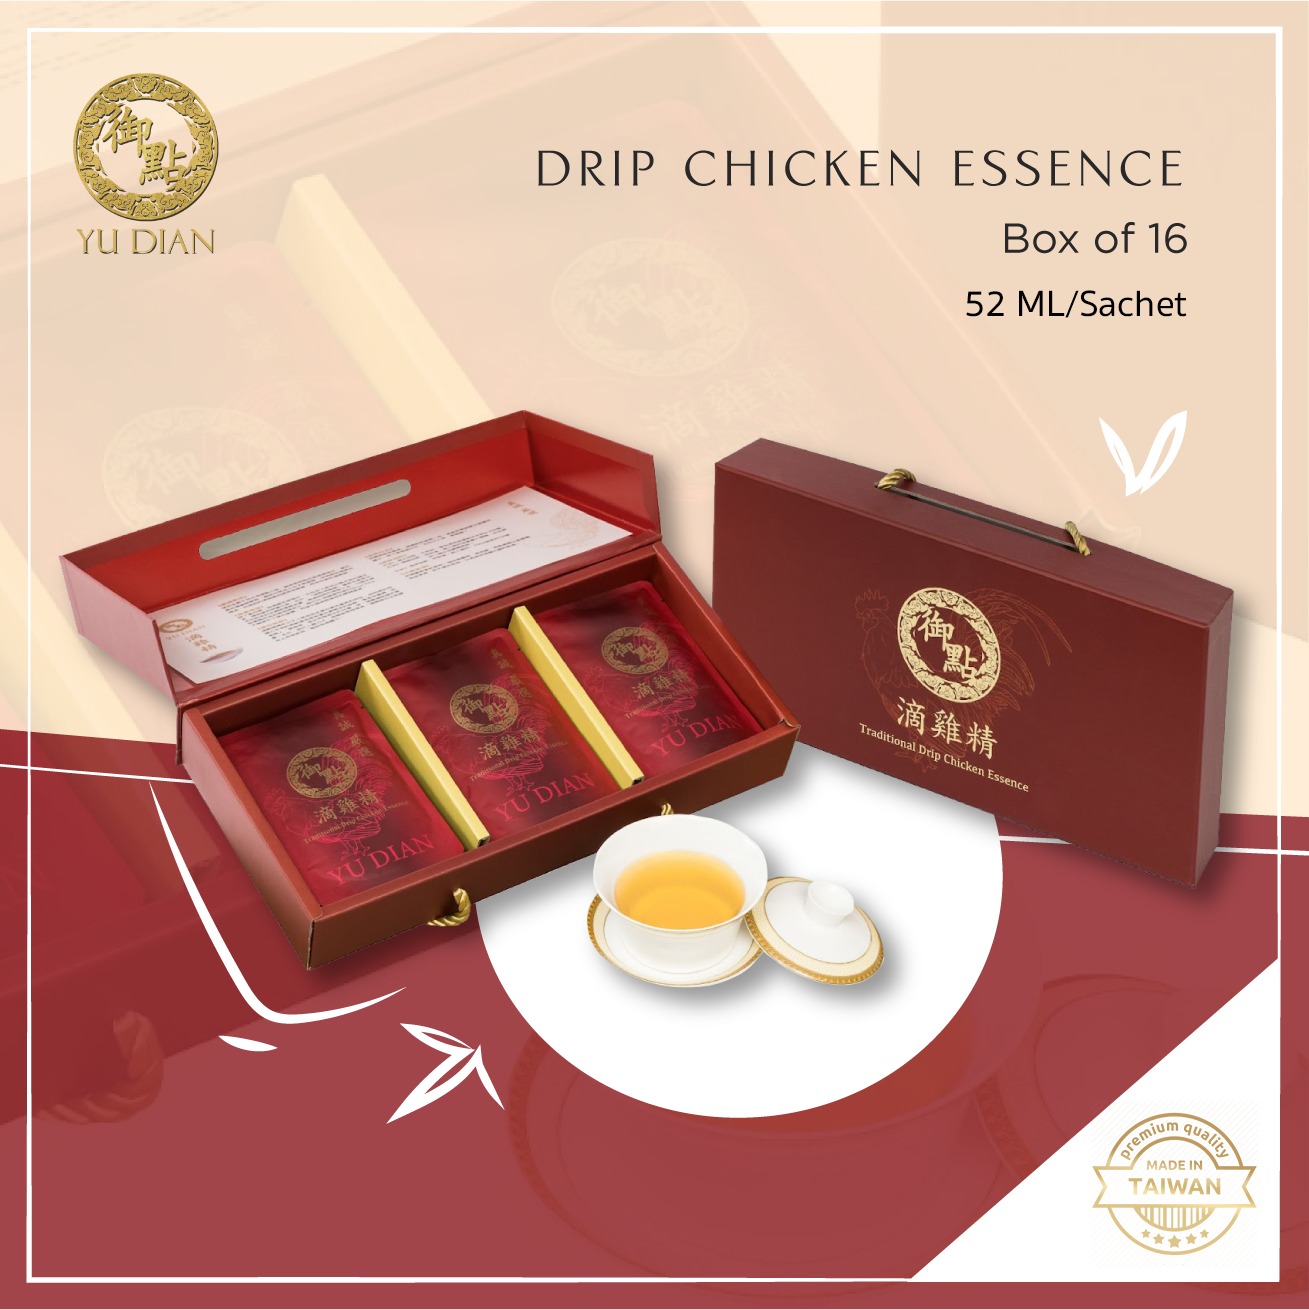 Yu Dian Drip Chicken Essence Box of 16